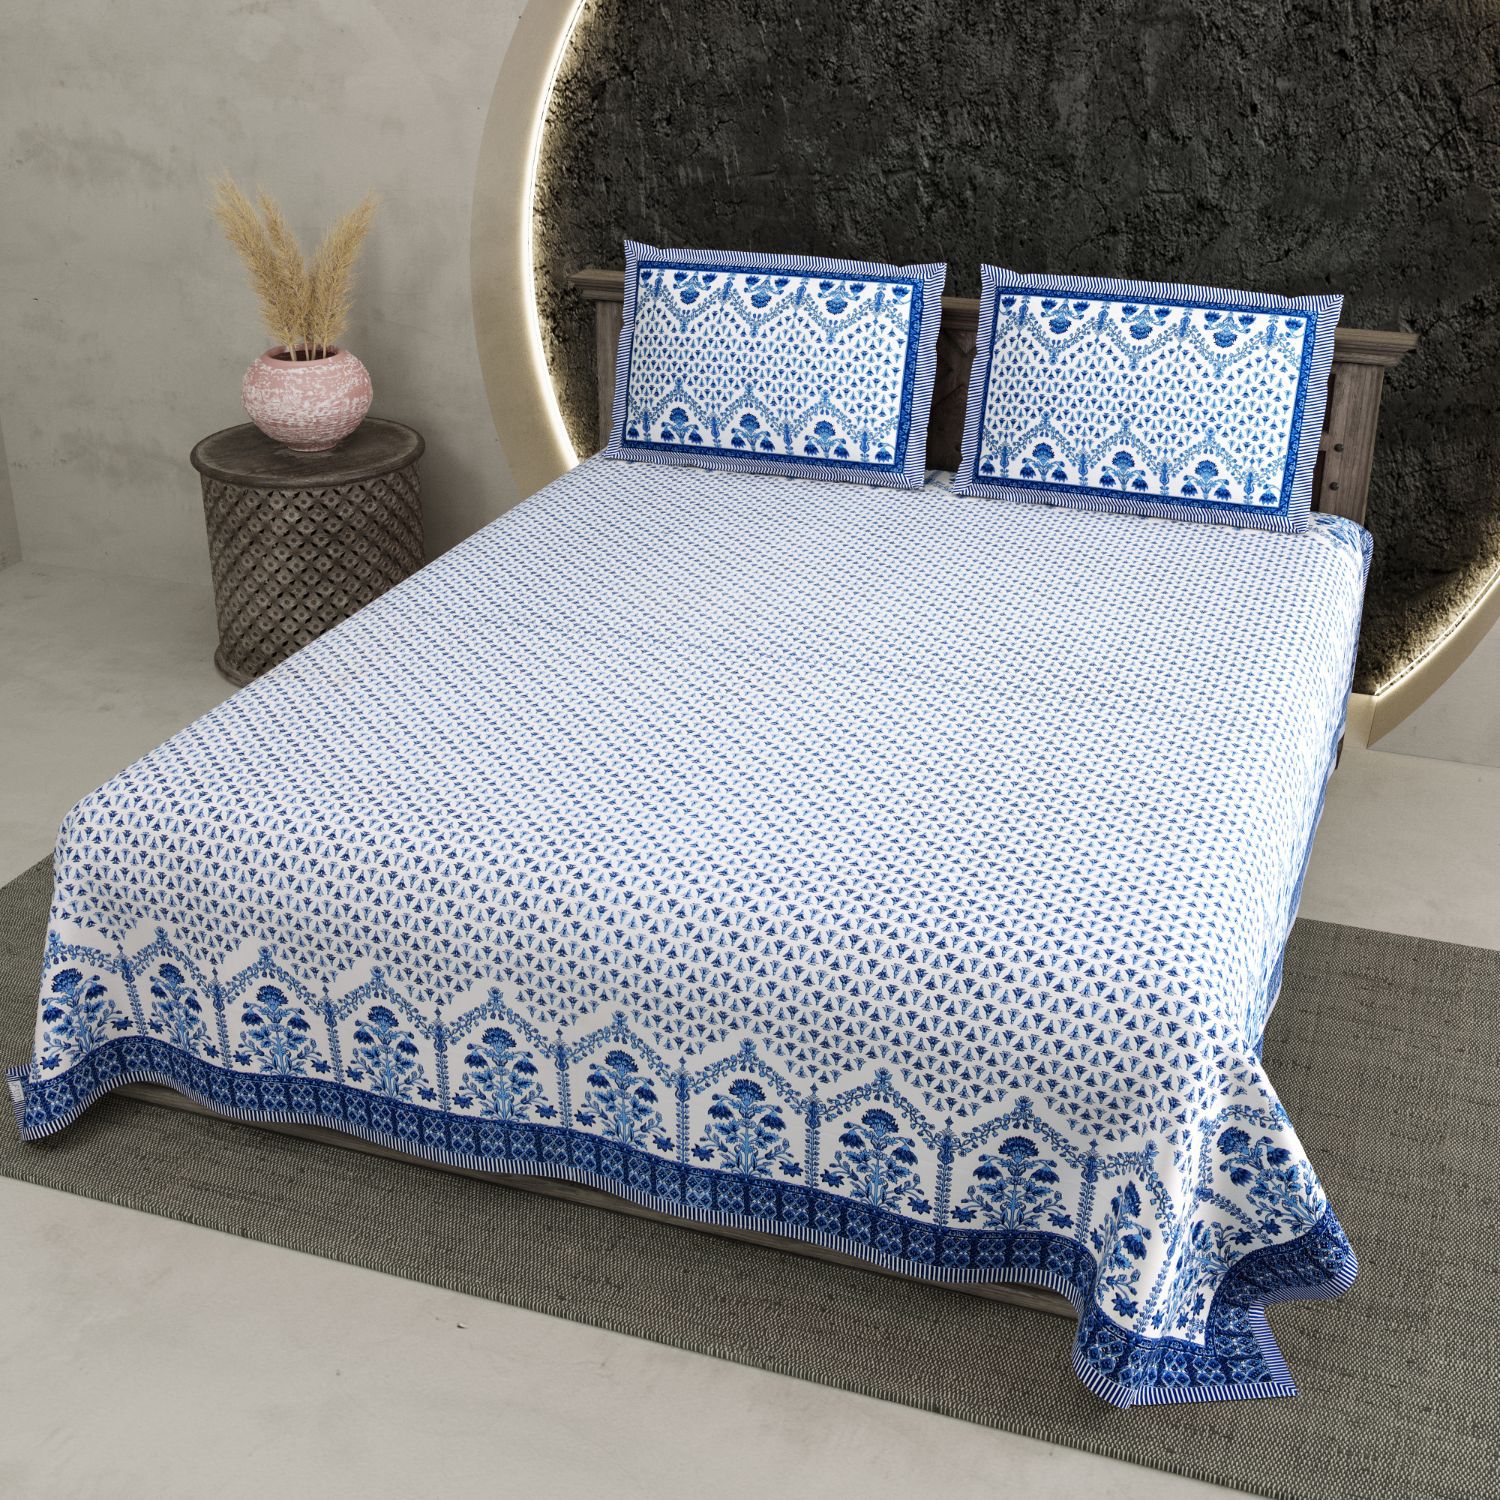     			UniqueChoice Cotton Floral Printed Double Bedsheet with 2 Pillow Covers - Multicolor